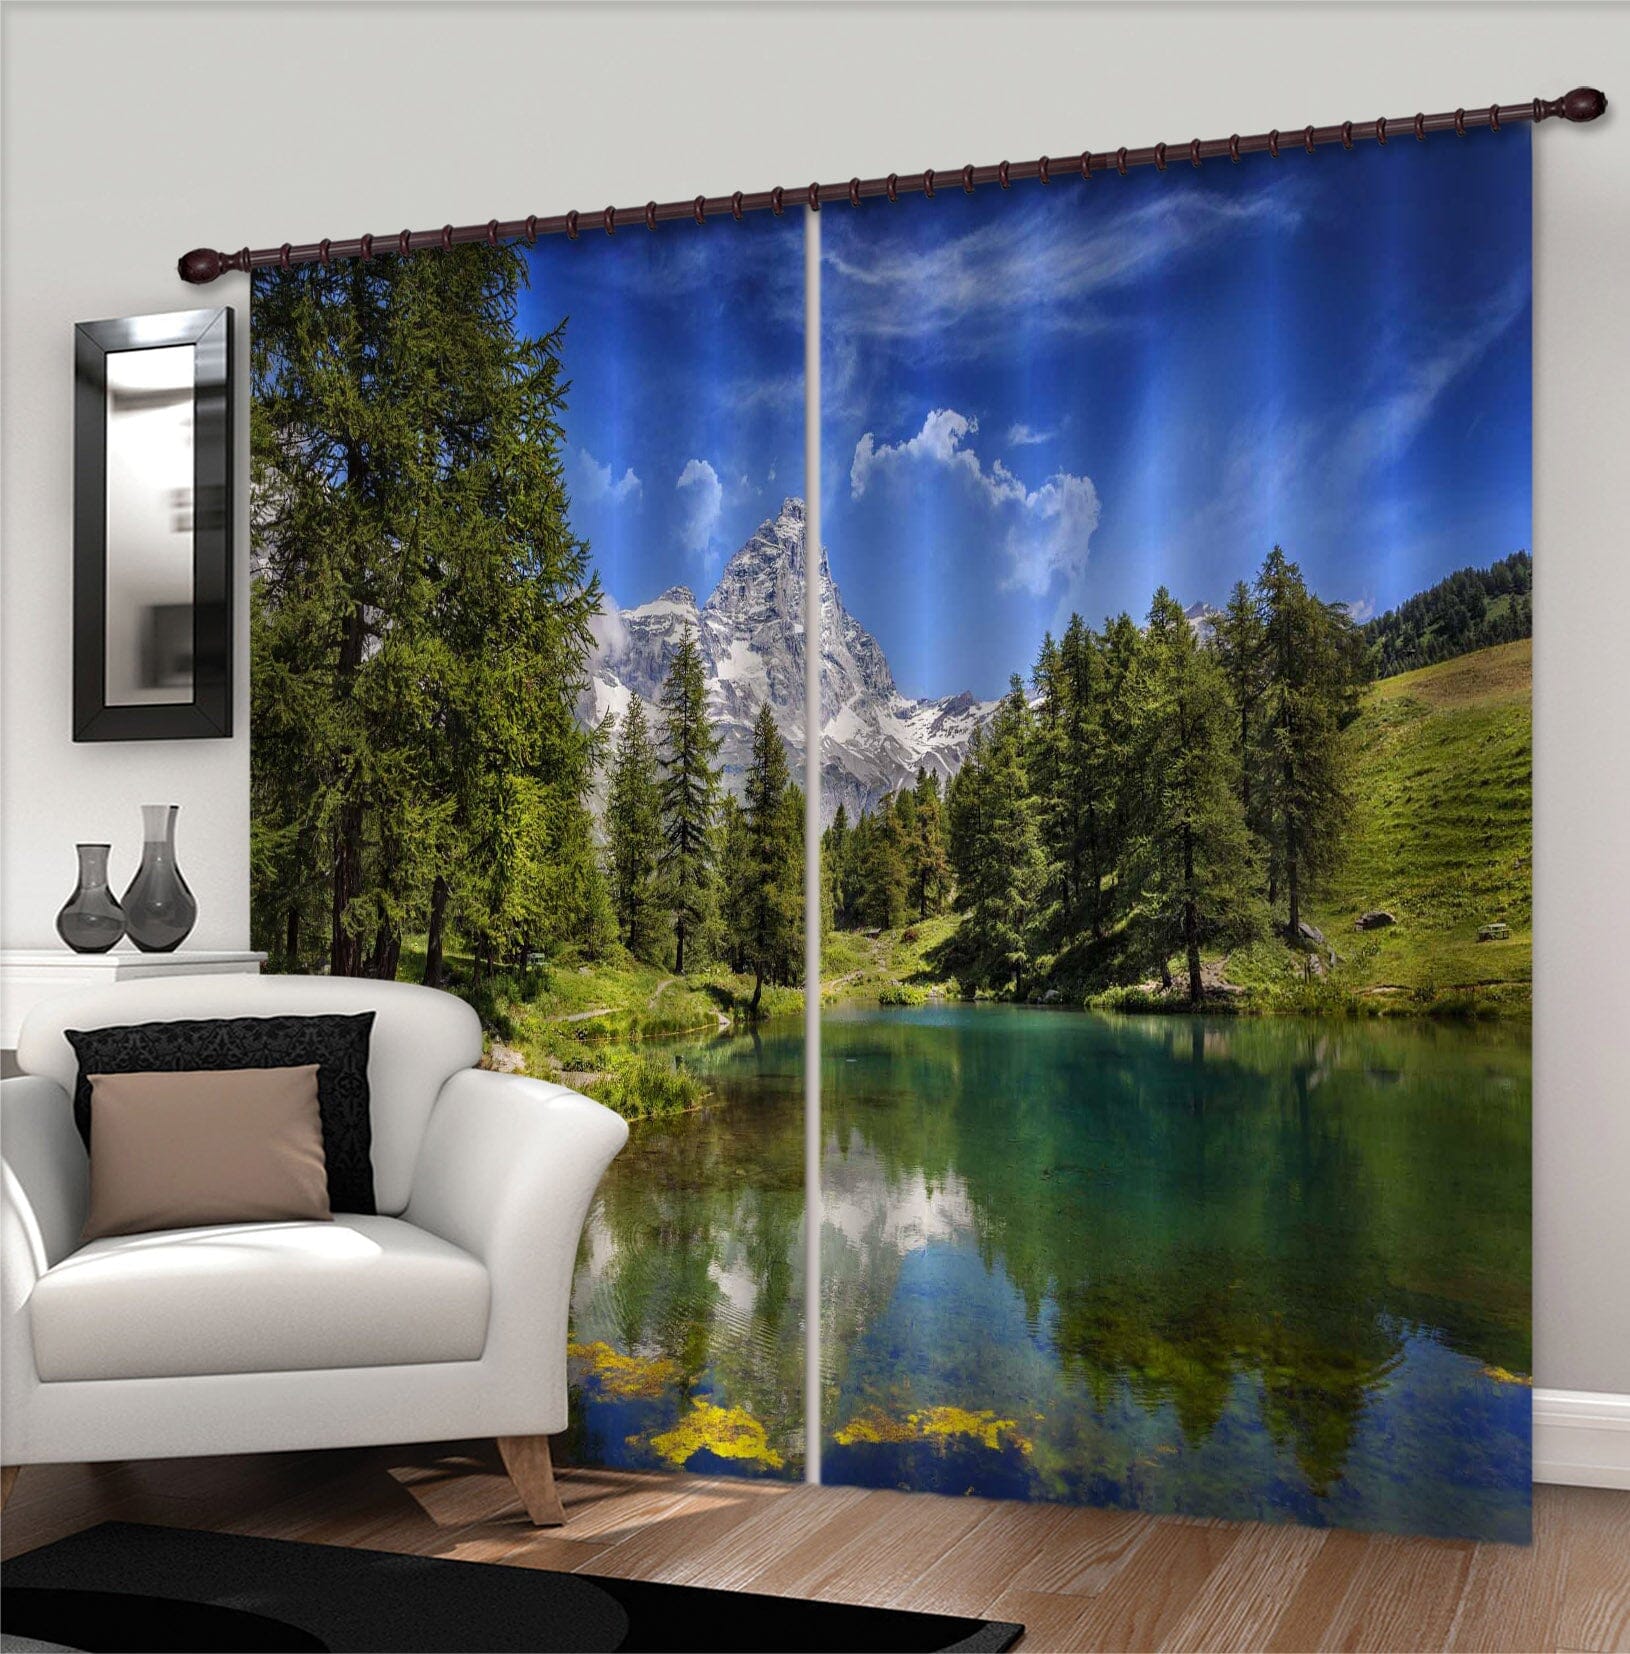 3D Forest Lake 054 Marco Carmassi Curtain Curtains Drapes Curtains AJ Creativity Home 